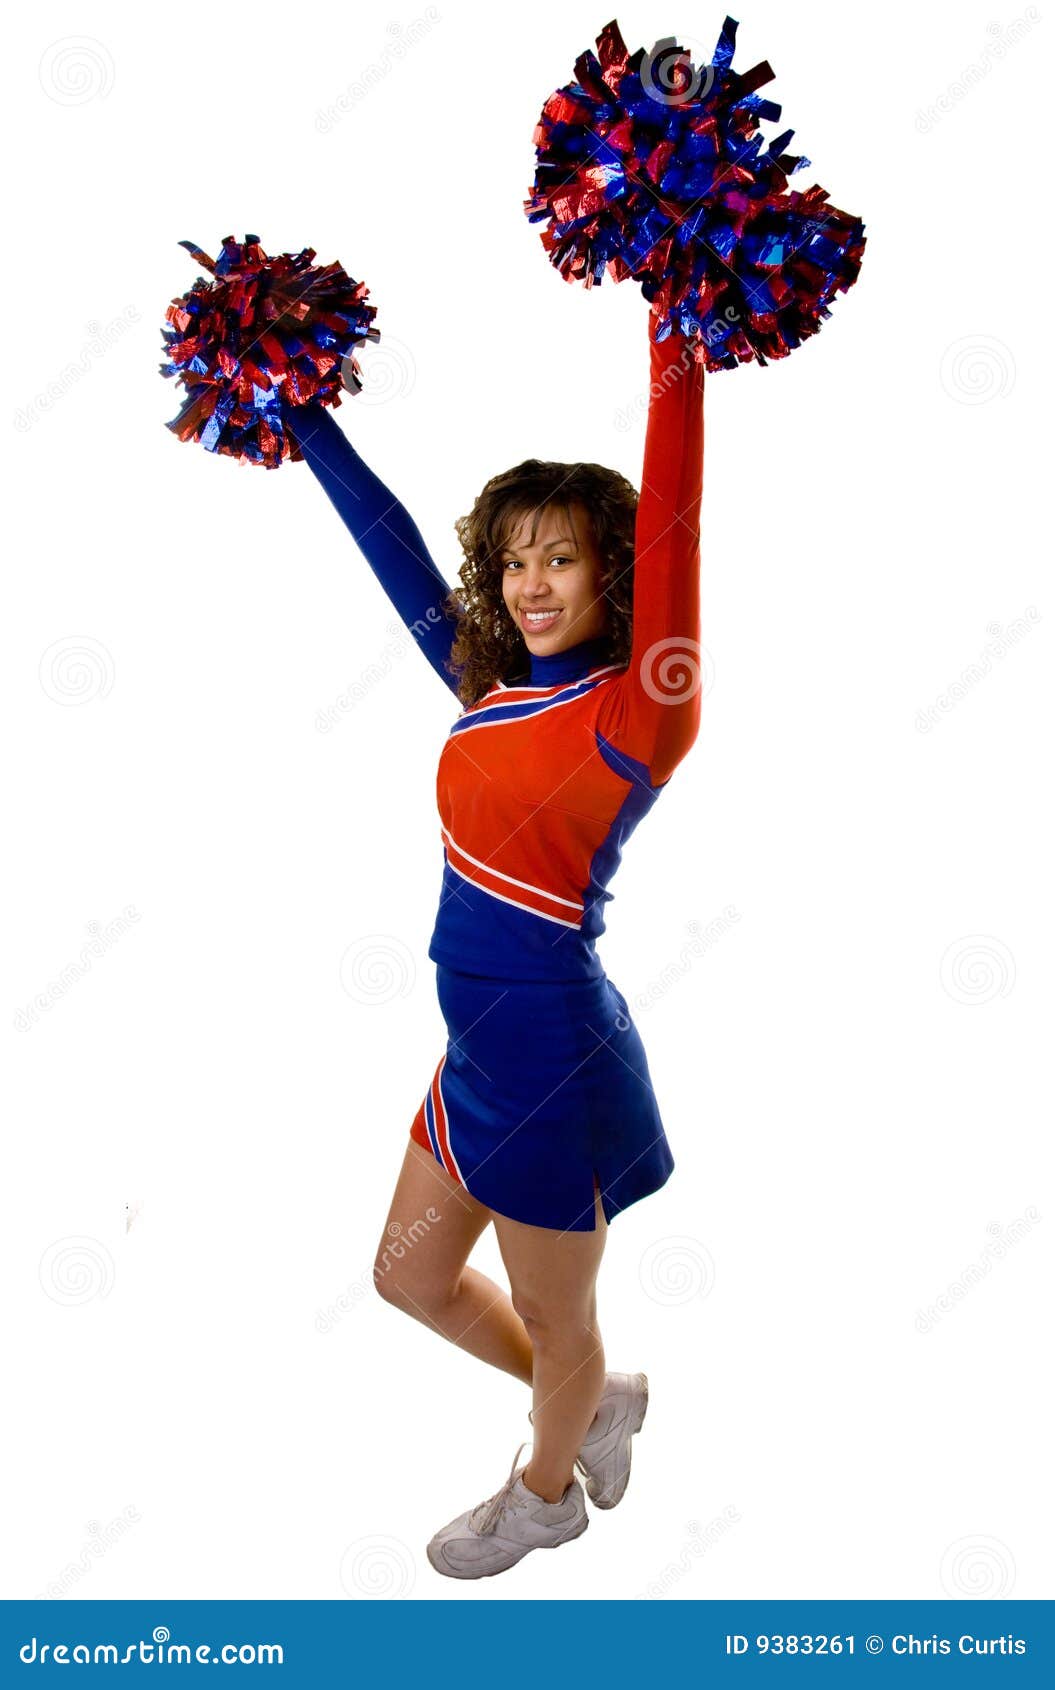 151 Cheerleader Pom Poms Isolated Stock Photos - Free & Royalty